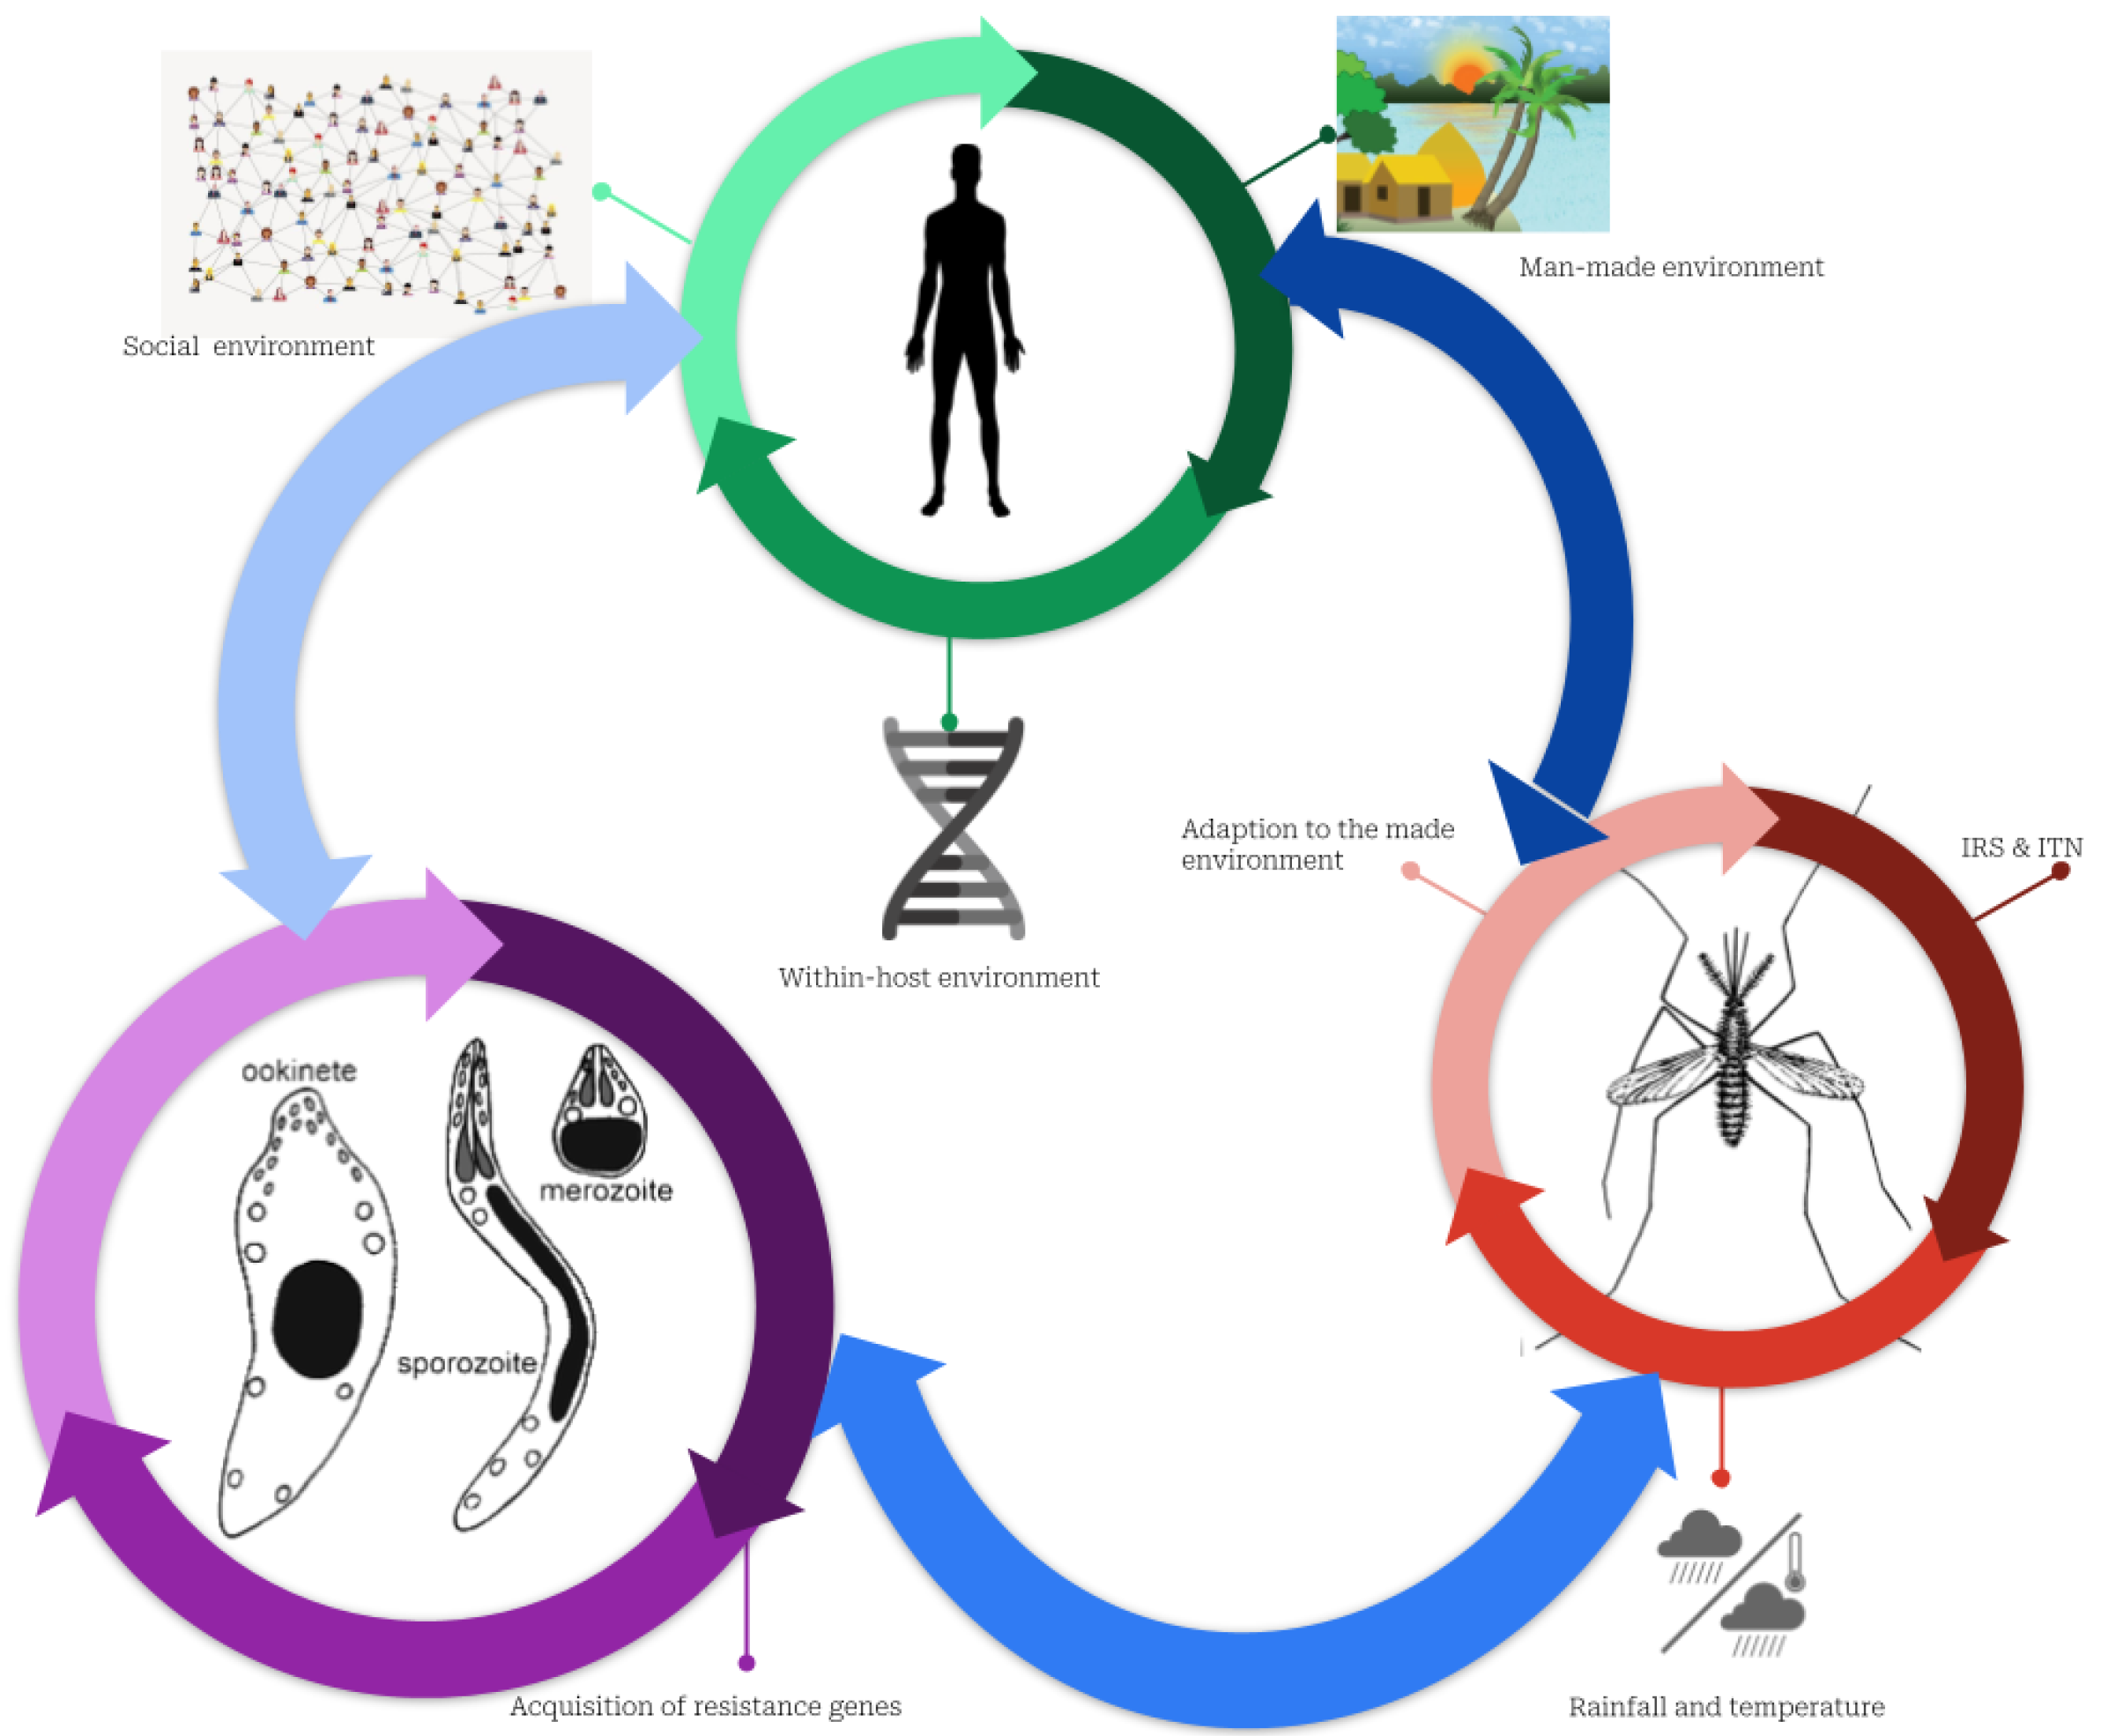 research topic on malaria pdf